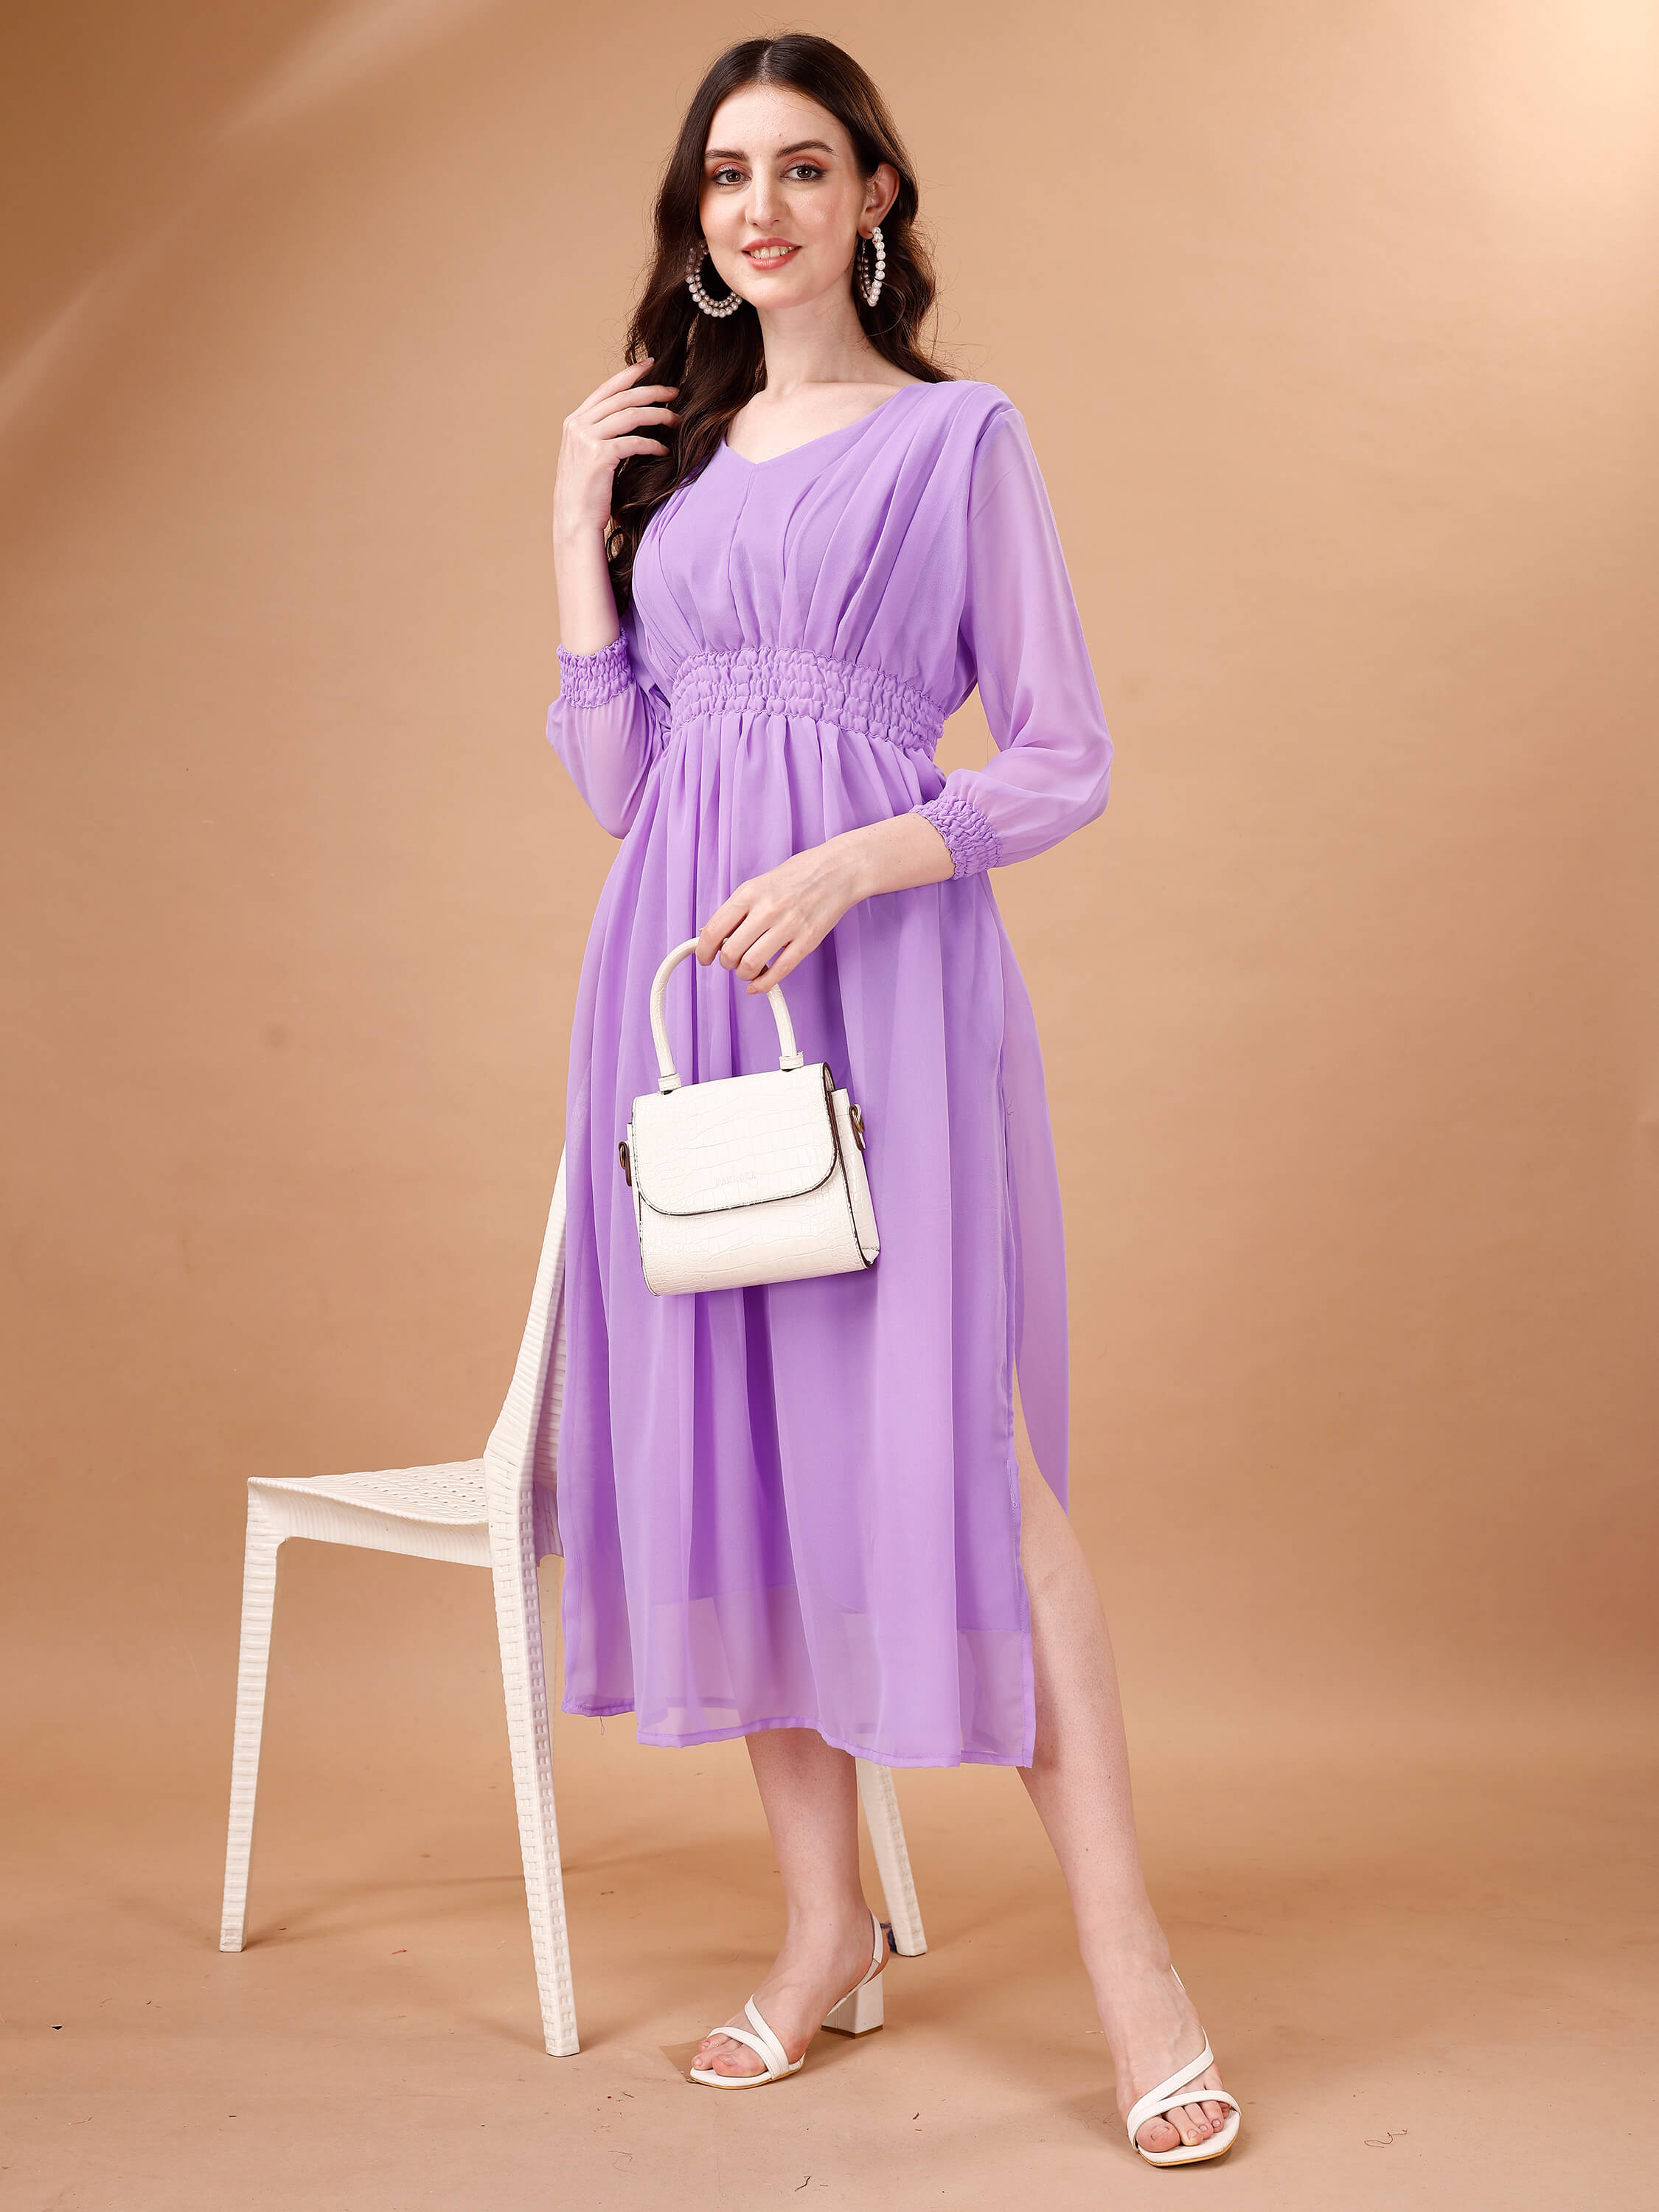 Chic Simplicity: Georgette Calf Length Dress with Elegant Side Slit - thevendorvilla